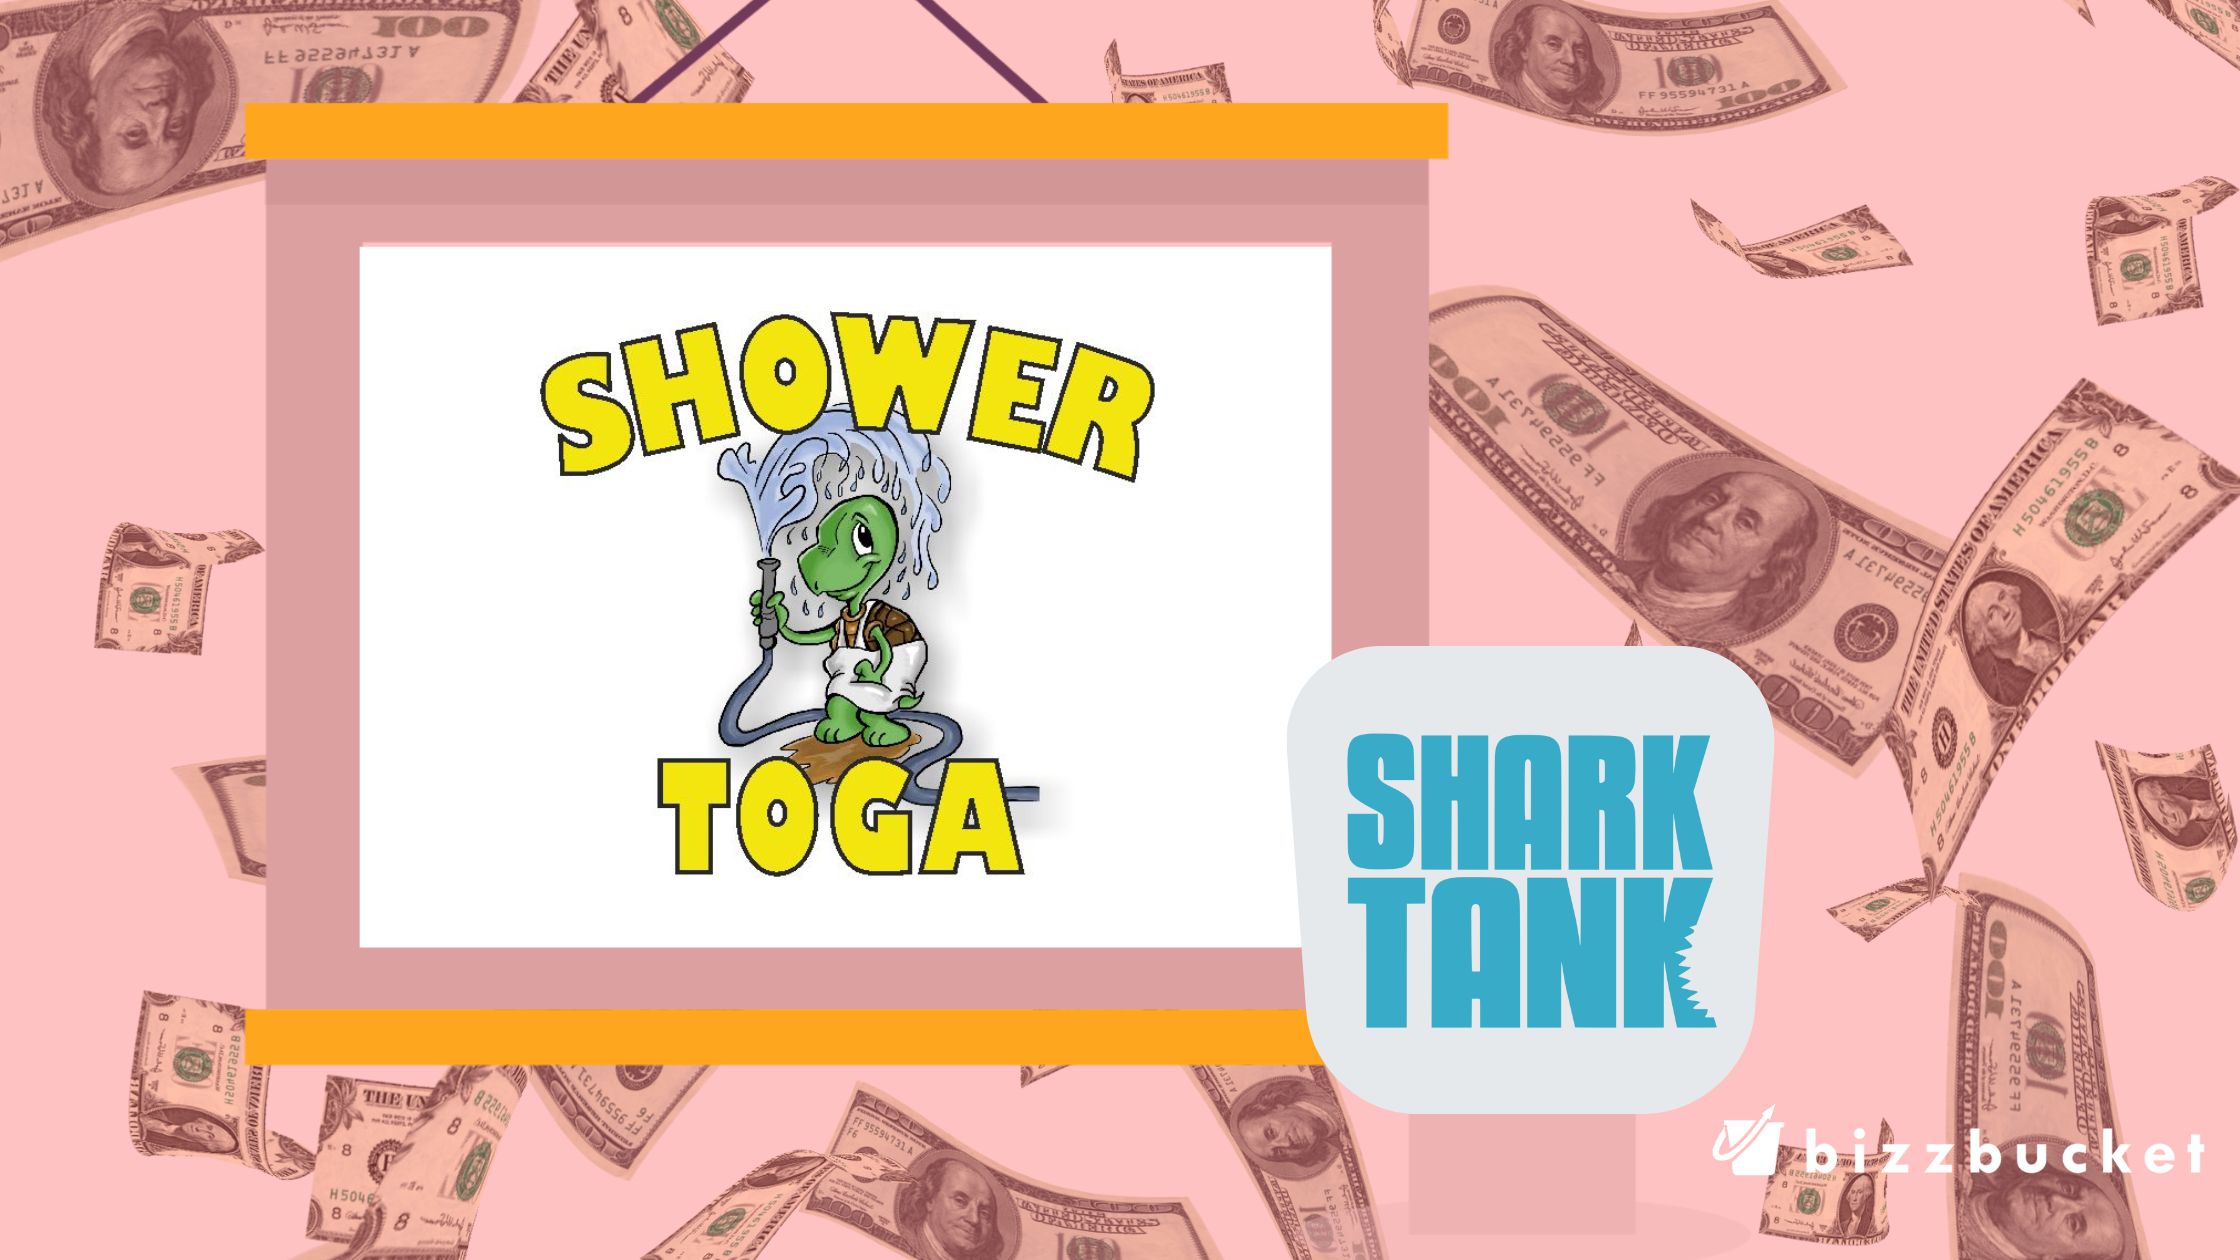 Shower Toga shark tank update